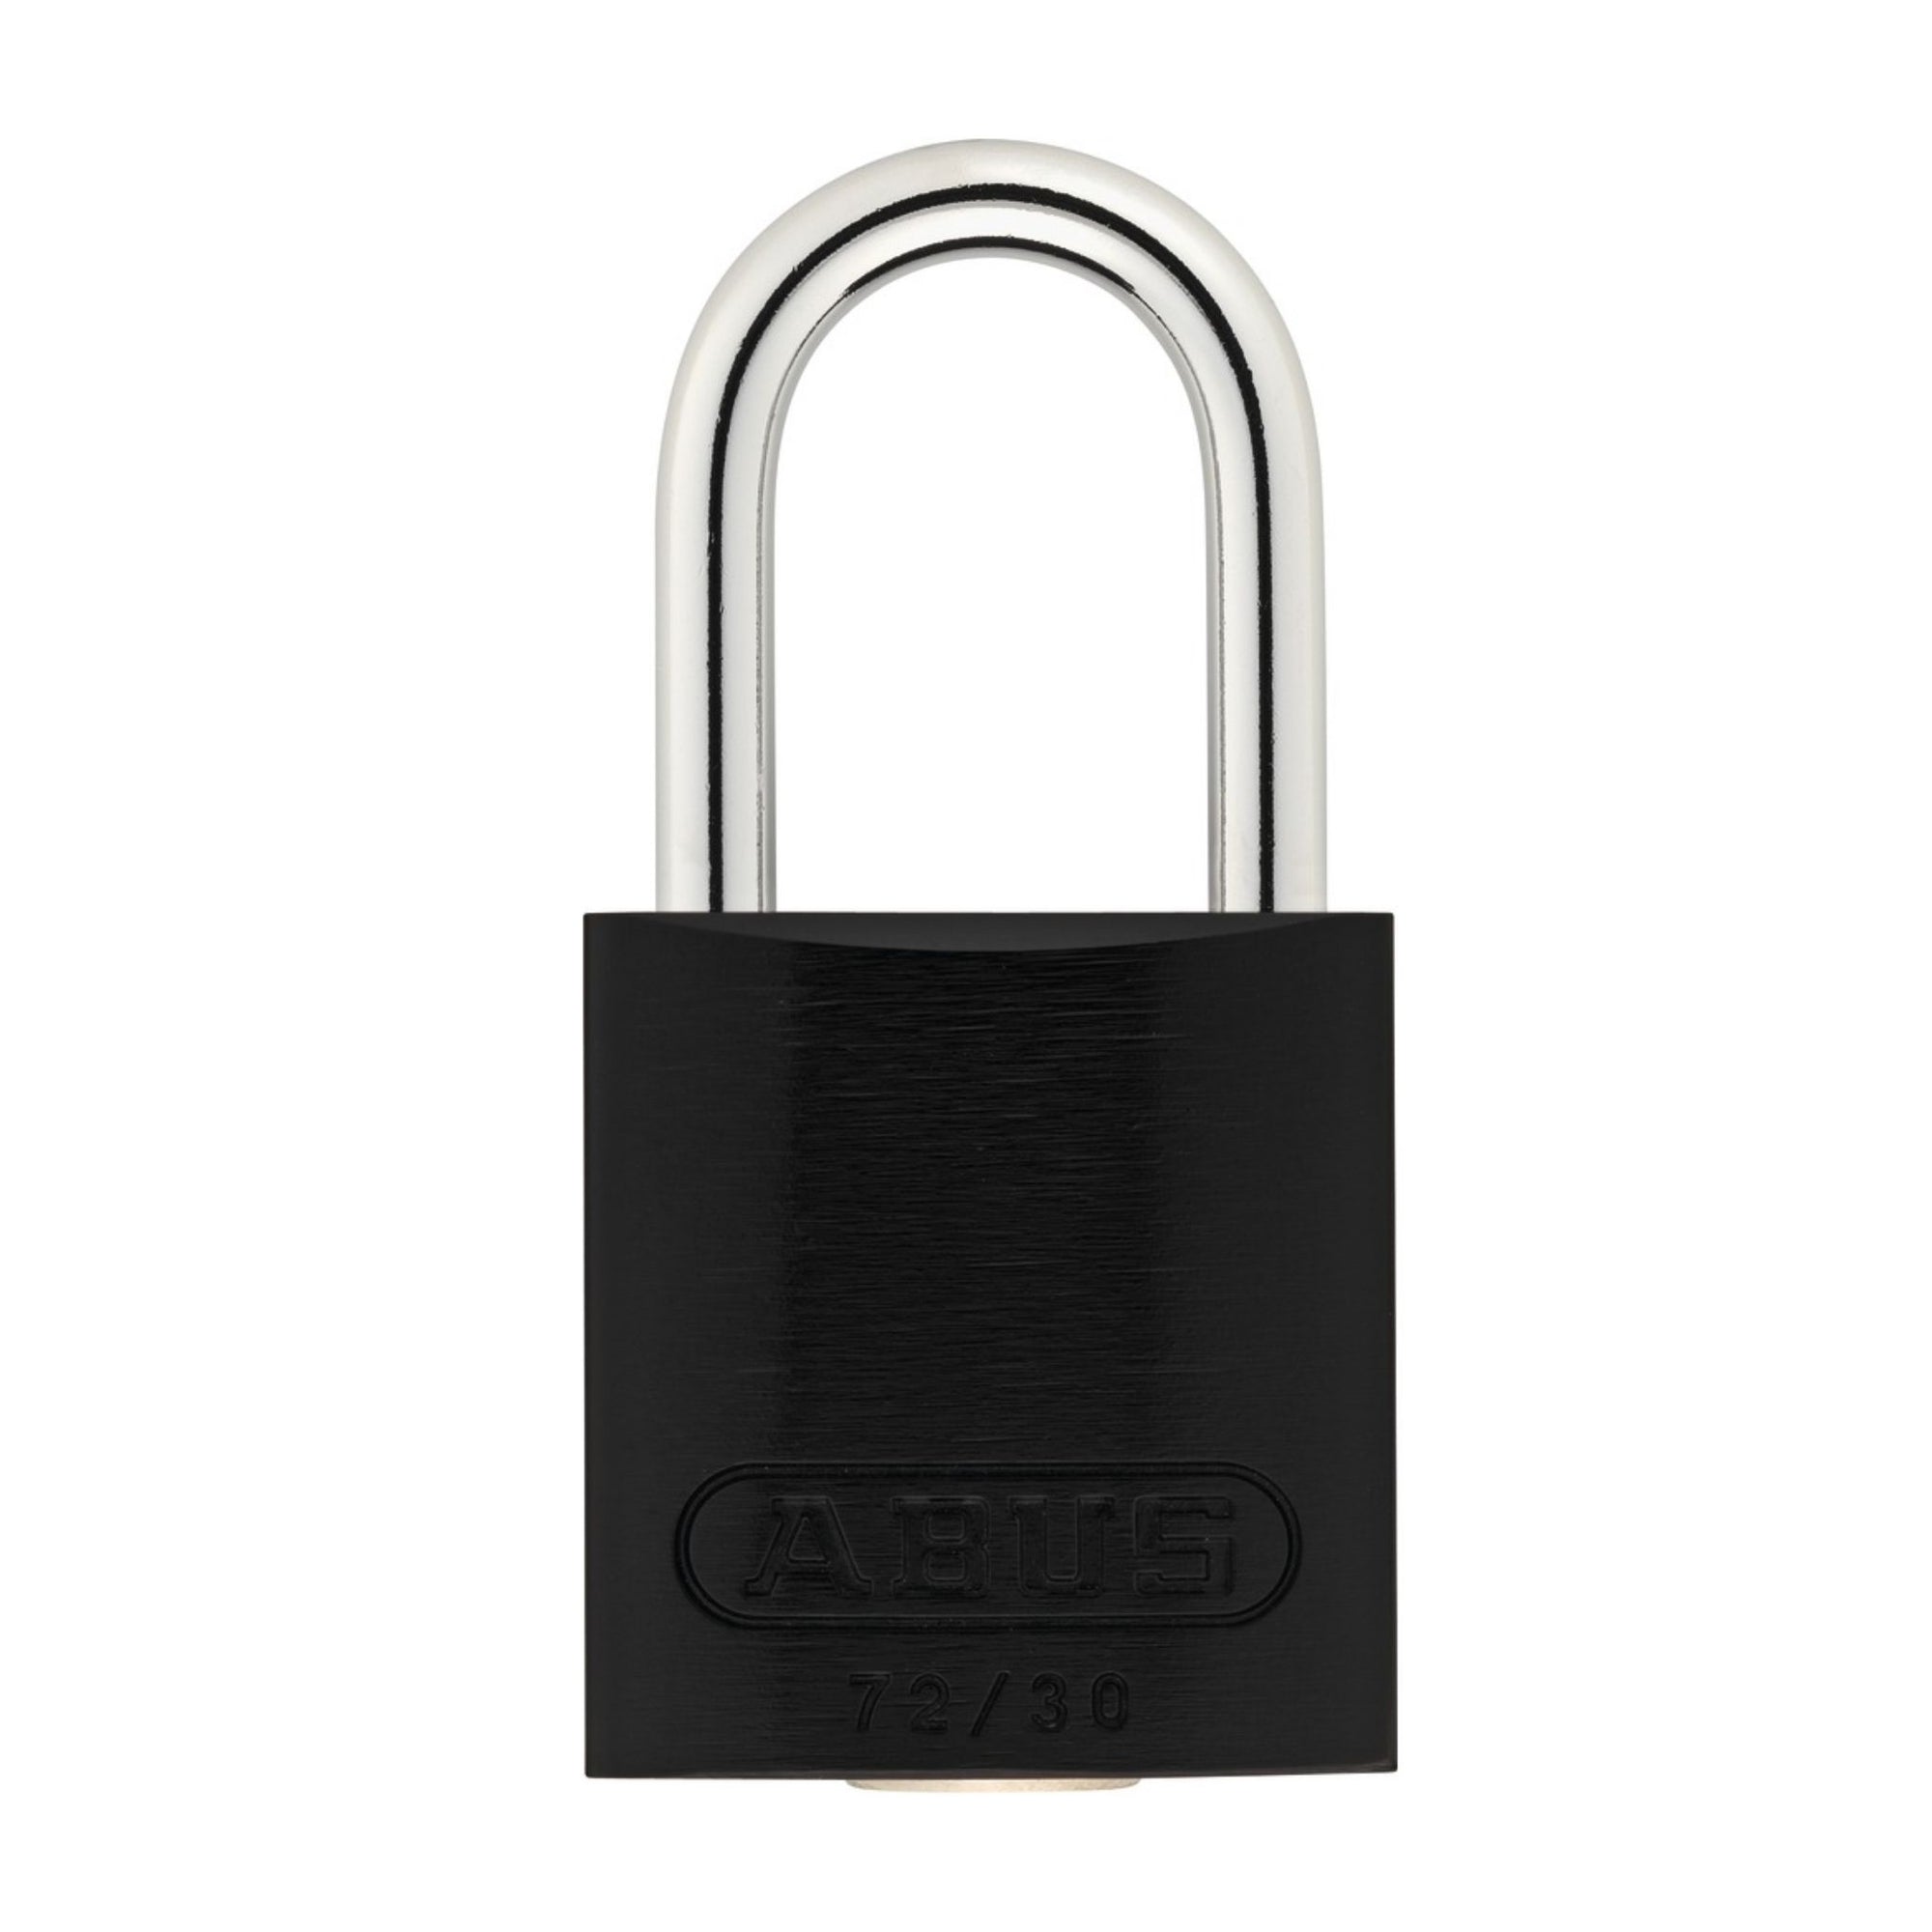 Abus 72/30 KD Black Aluminum Safety Padlock - The Lock Source